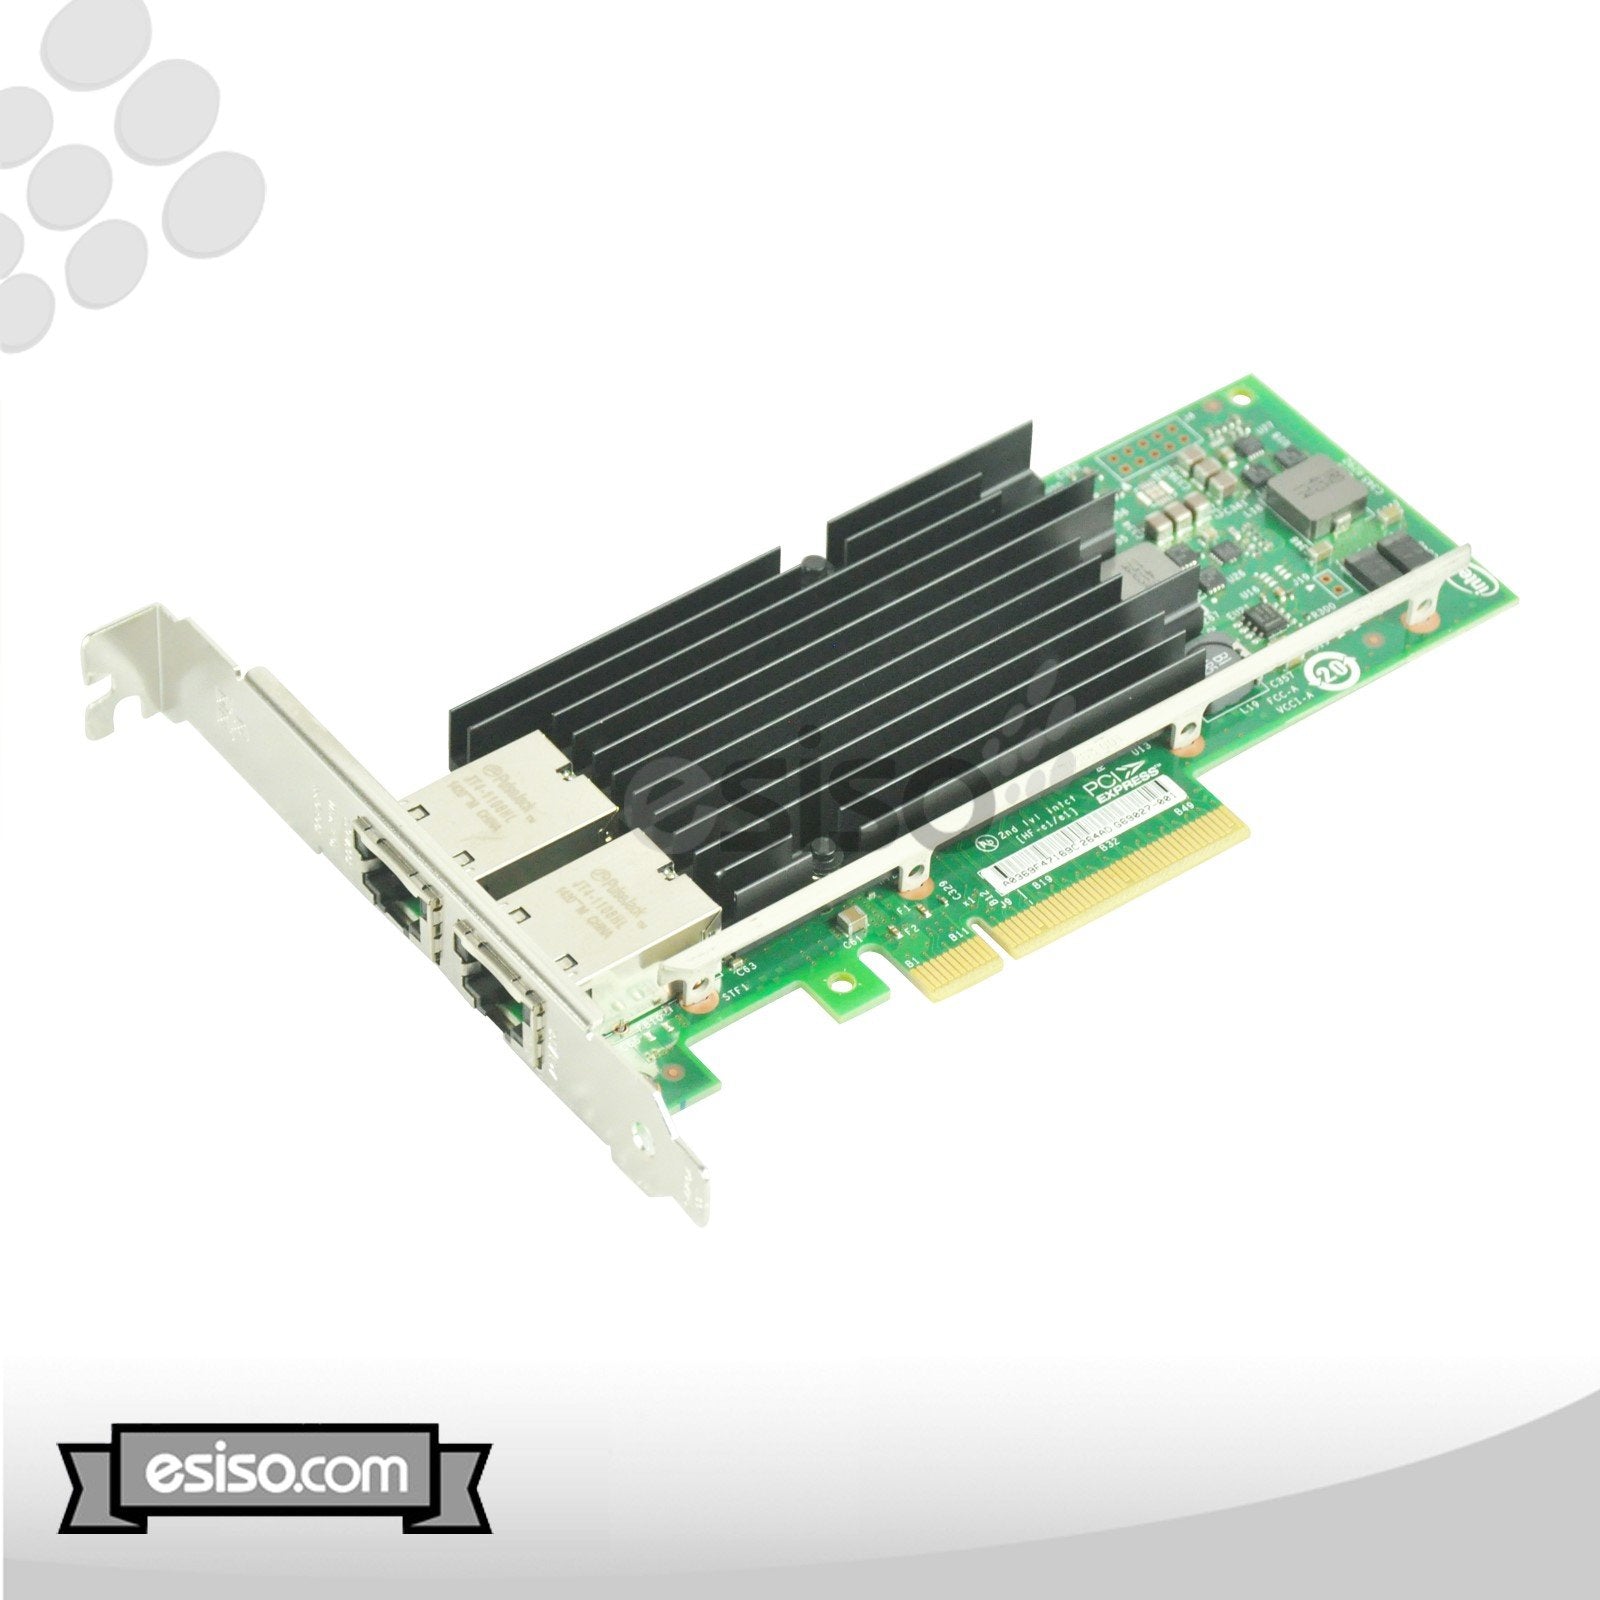 74-11070-01 UCSC-PCIE-ITG CISCO X540-T2 10GB 2P NETWORK ADAPTER W/ BOTH BRACKET